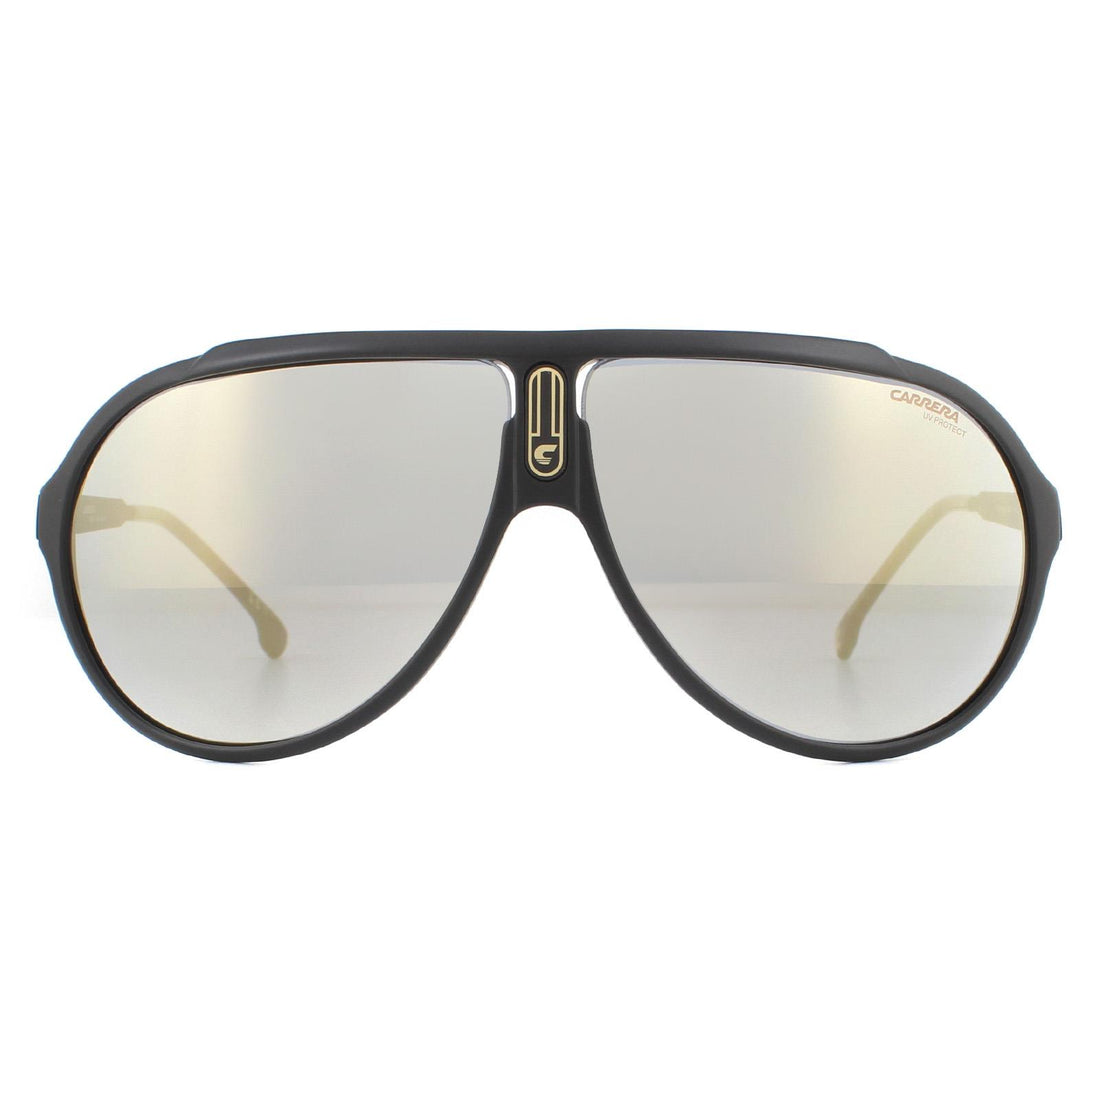 Carrera Endurance65 Sunglasses Matte Black / Grey Gold Mirror